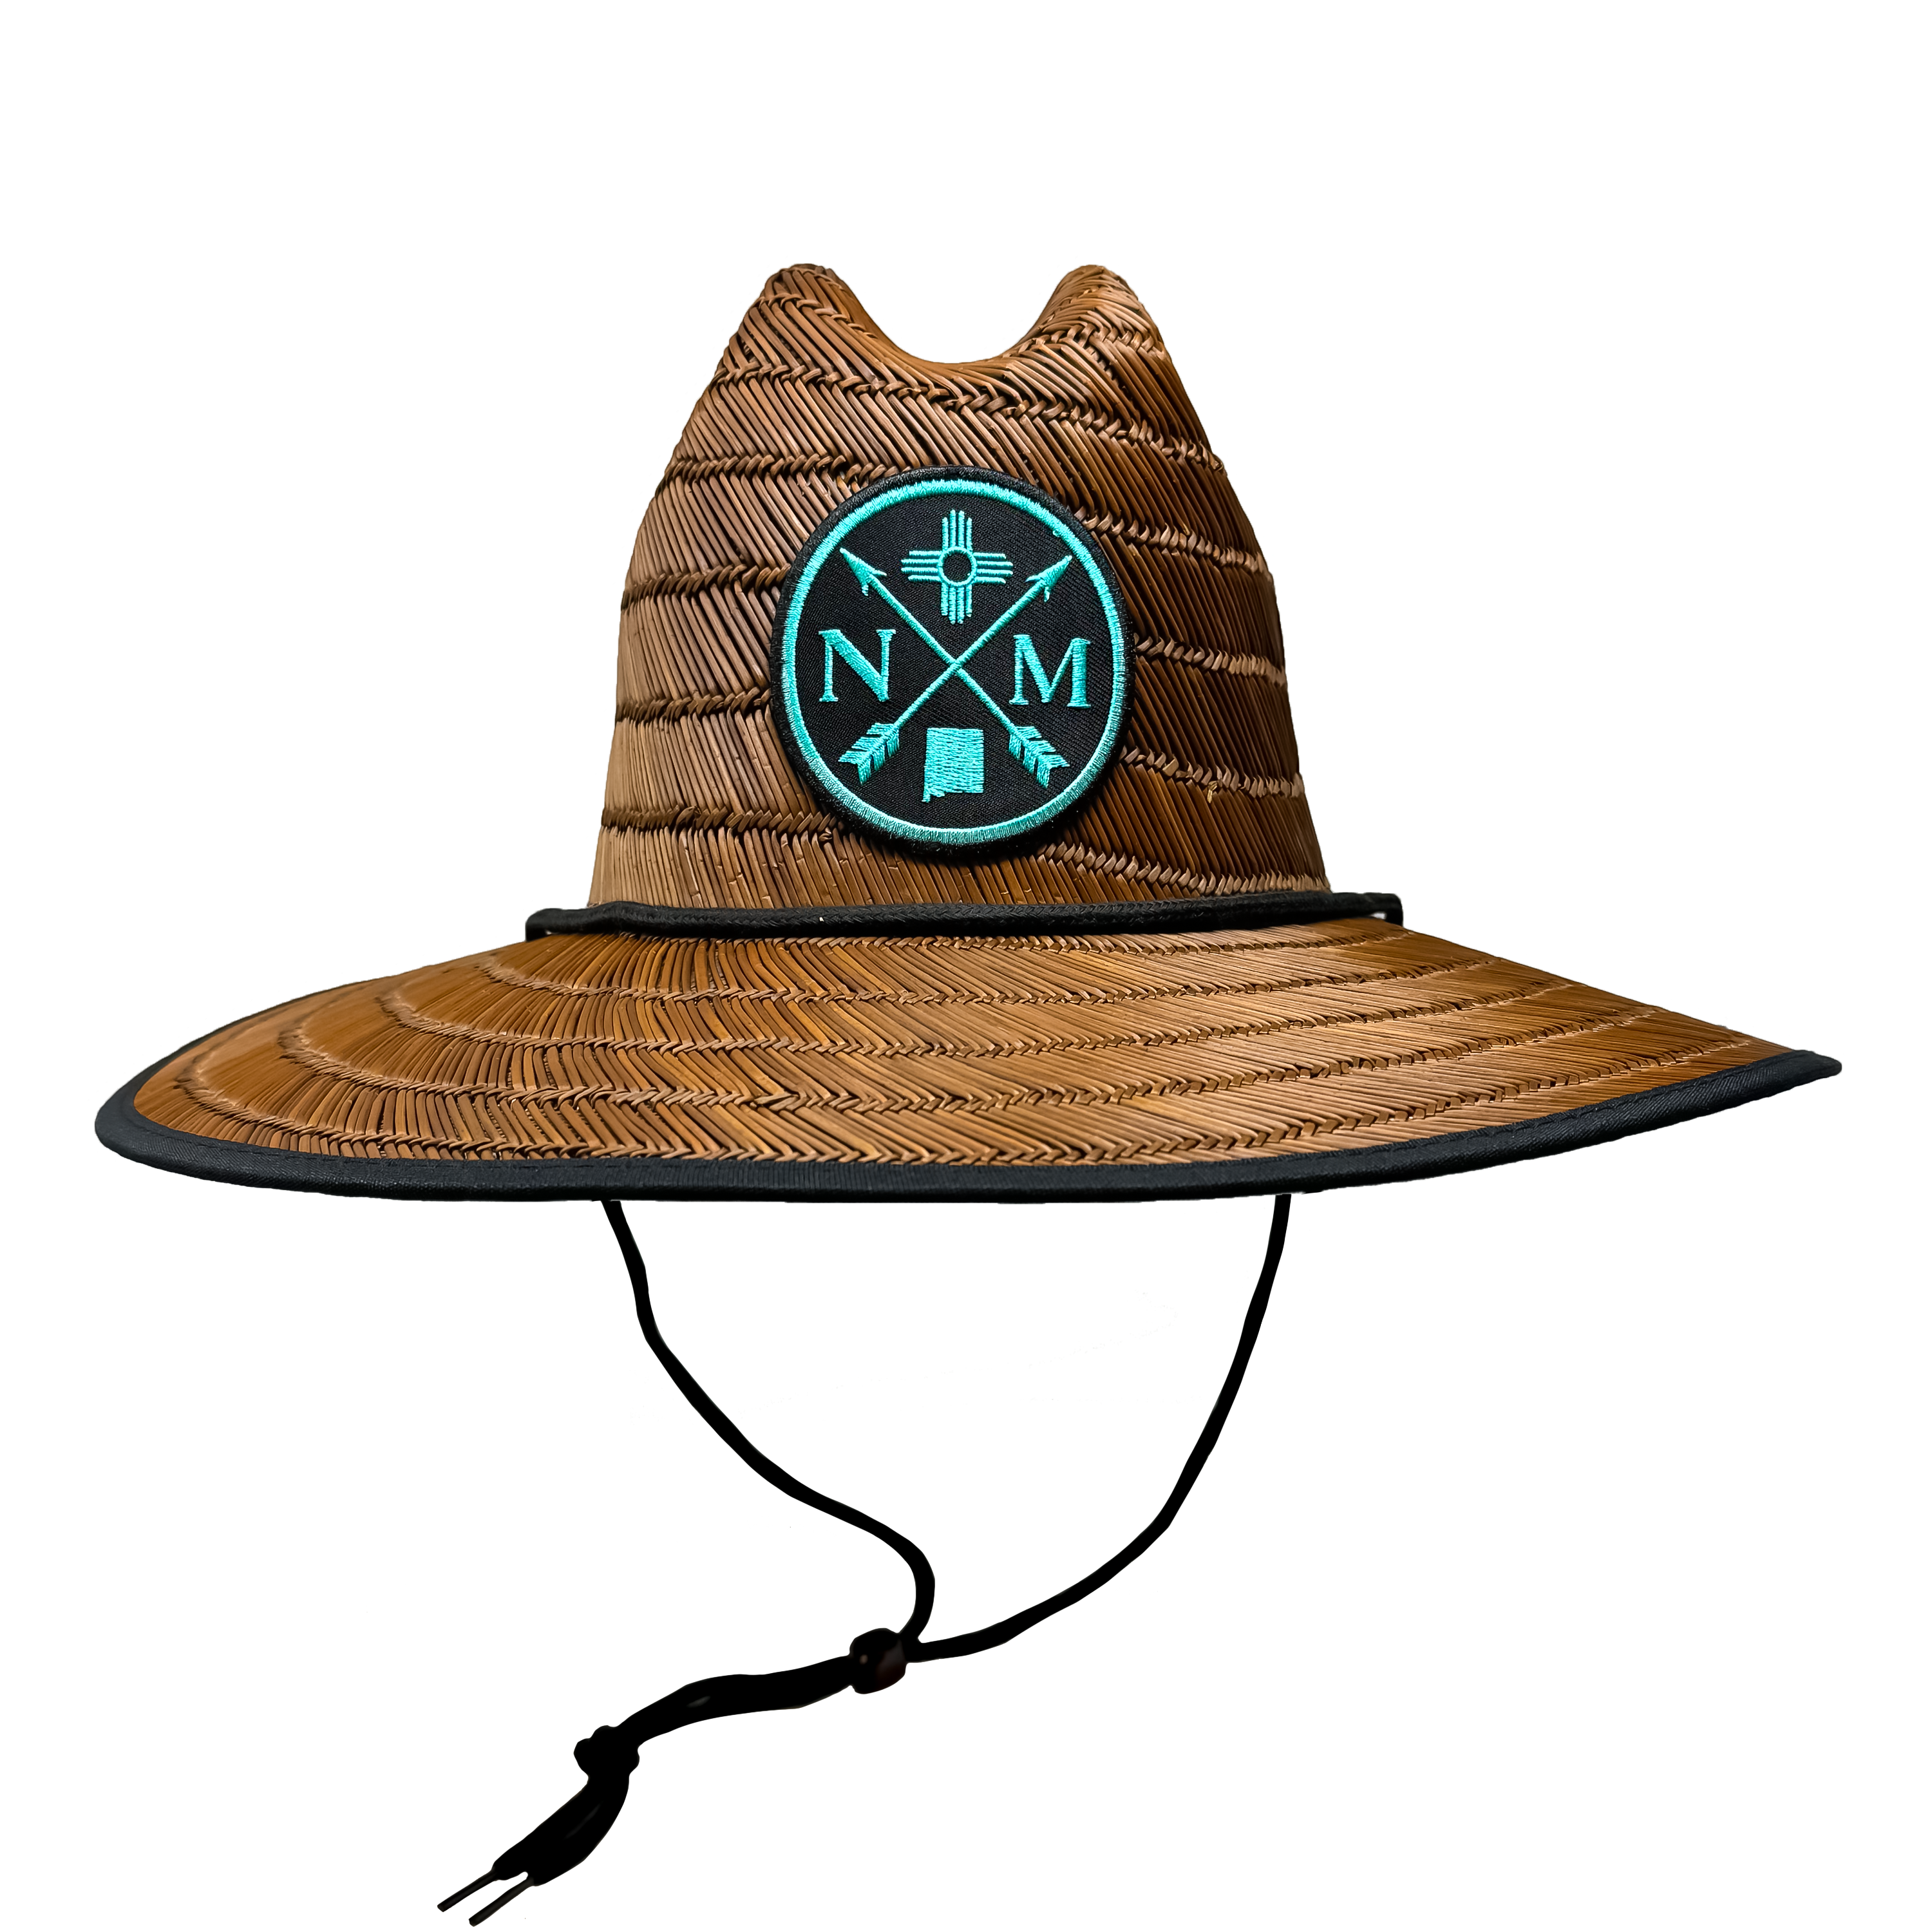 New Mexico Crossed Arrow Straw Hat- Turquoise